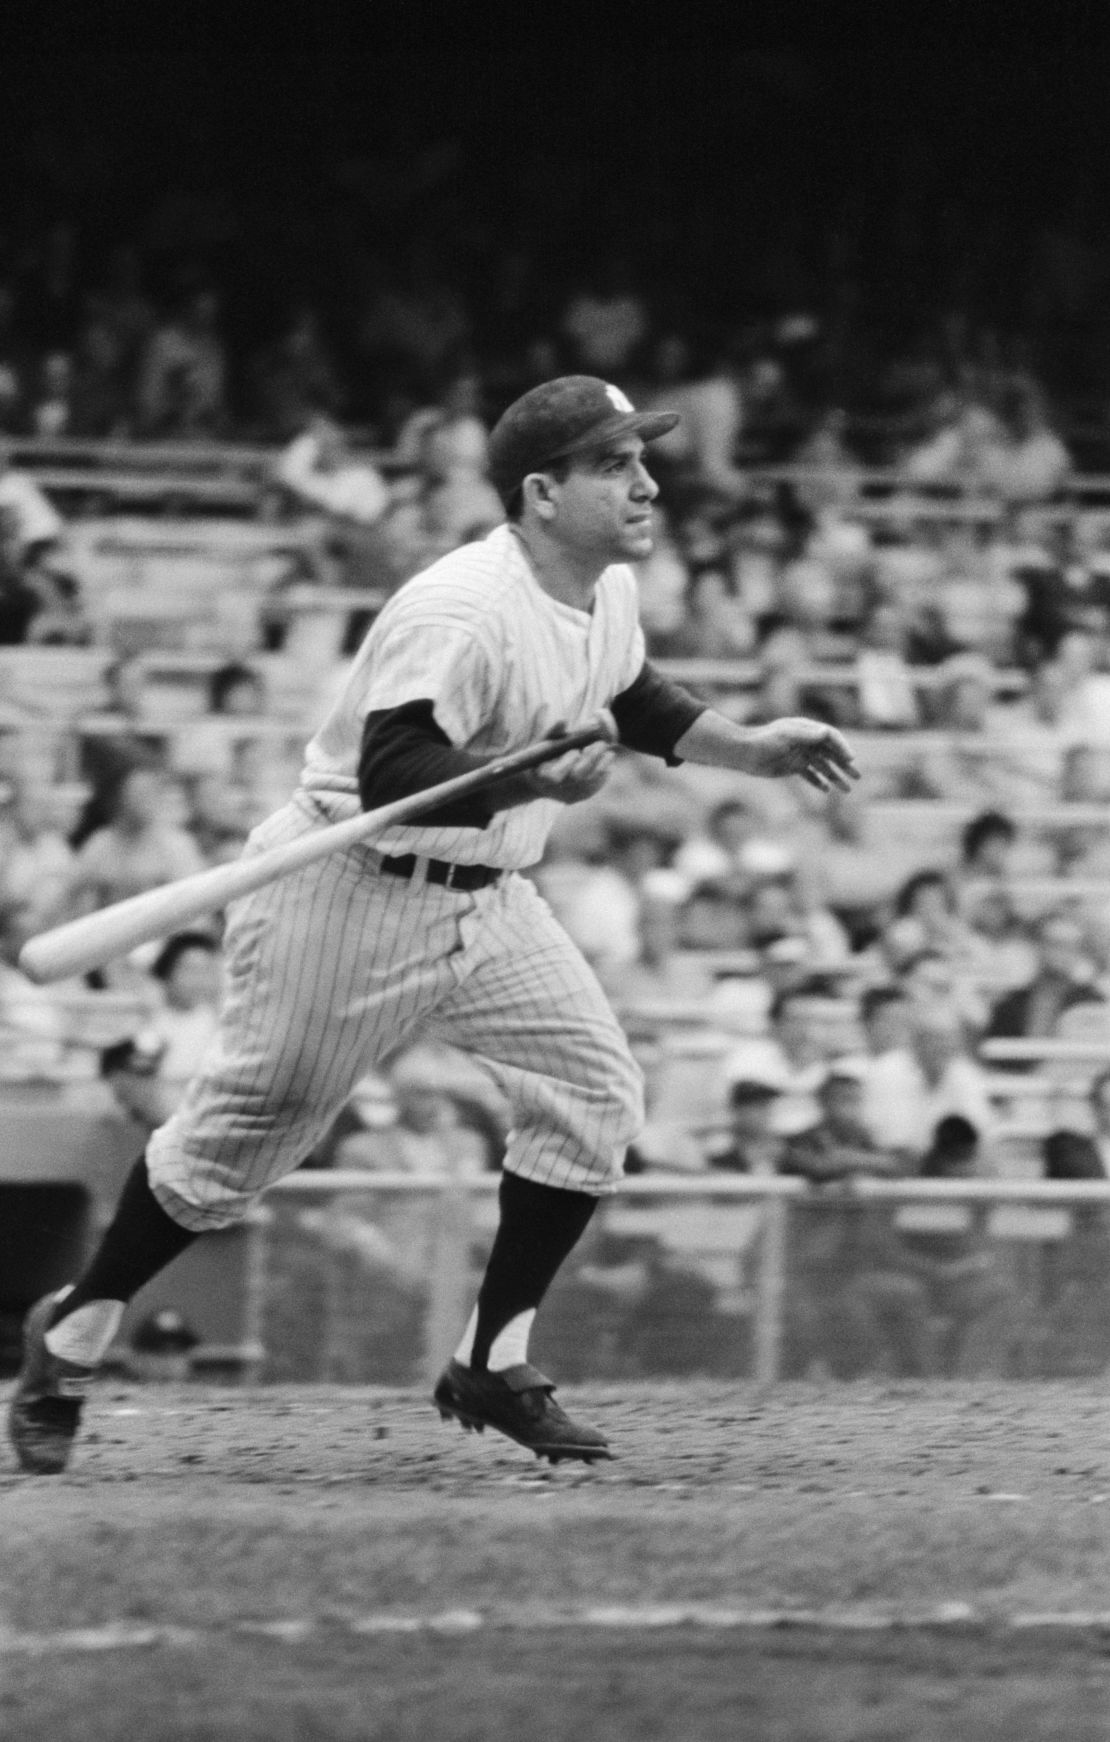 Hall of Fame catcher Yogi Berra dies at 90 - The Washington Post